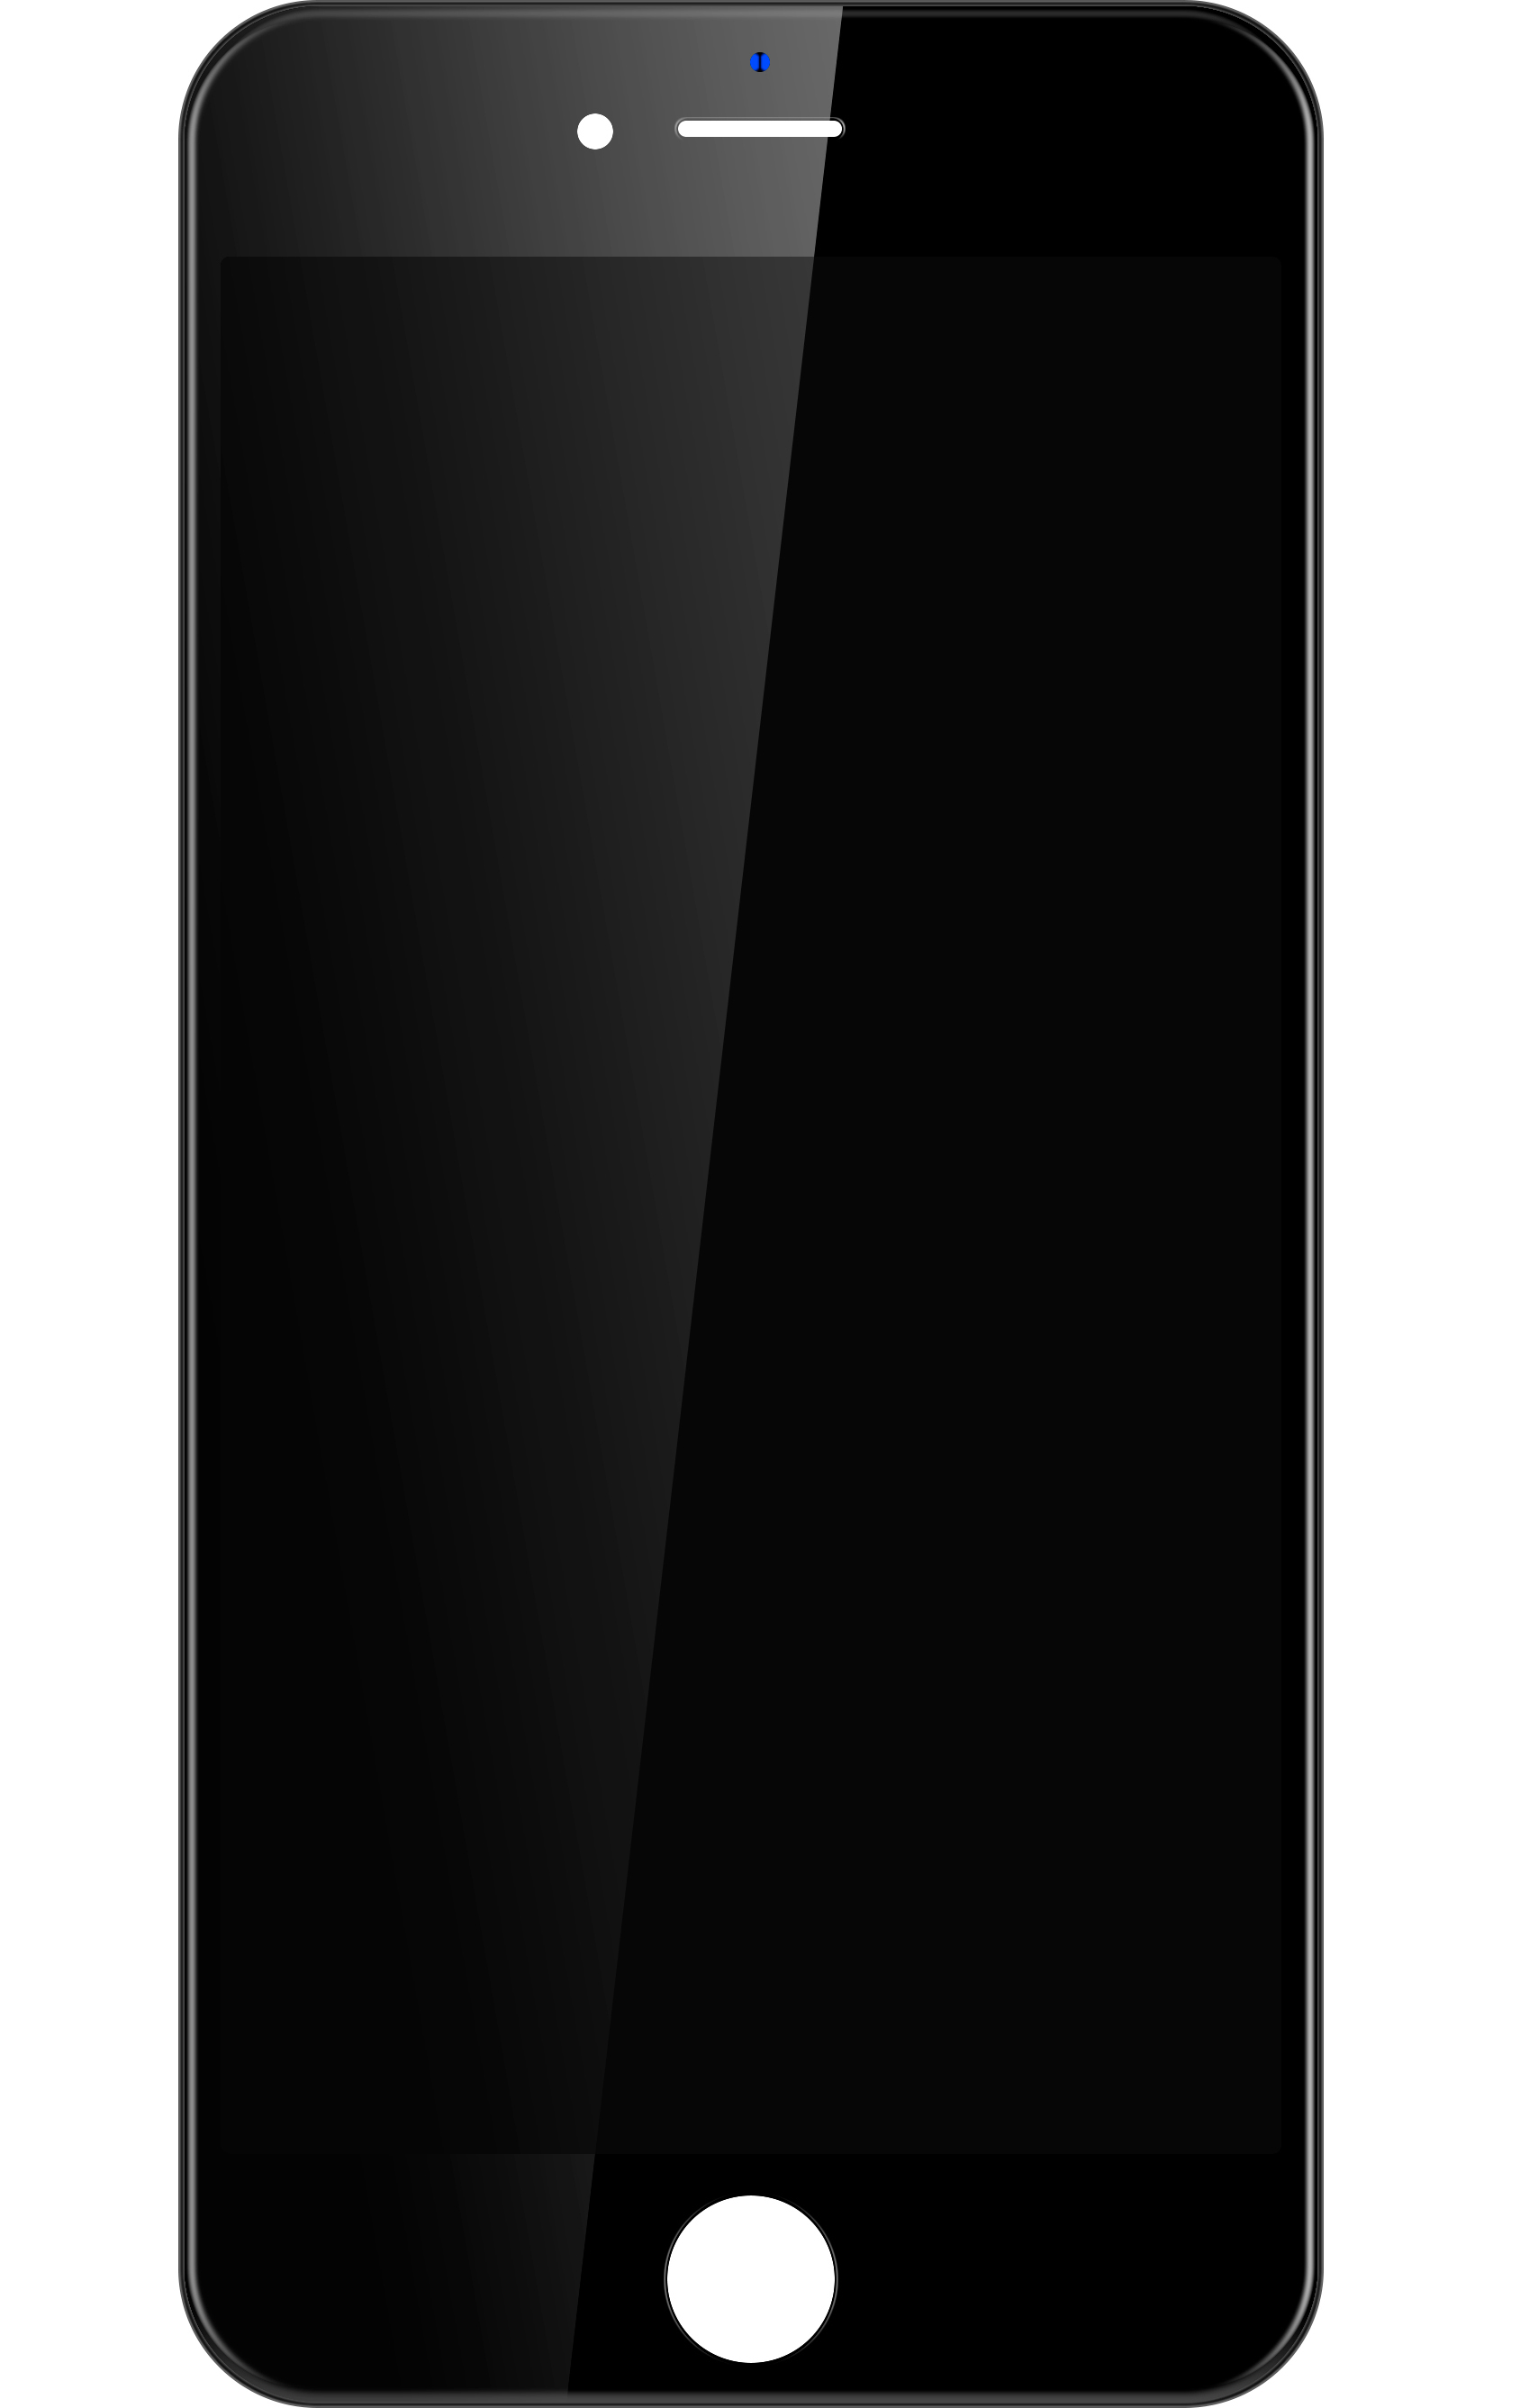 Apple iPhone 6s Black LCD Display Module (Refurbished)